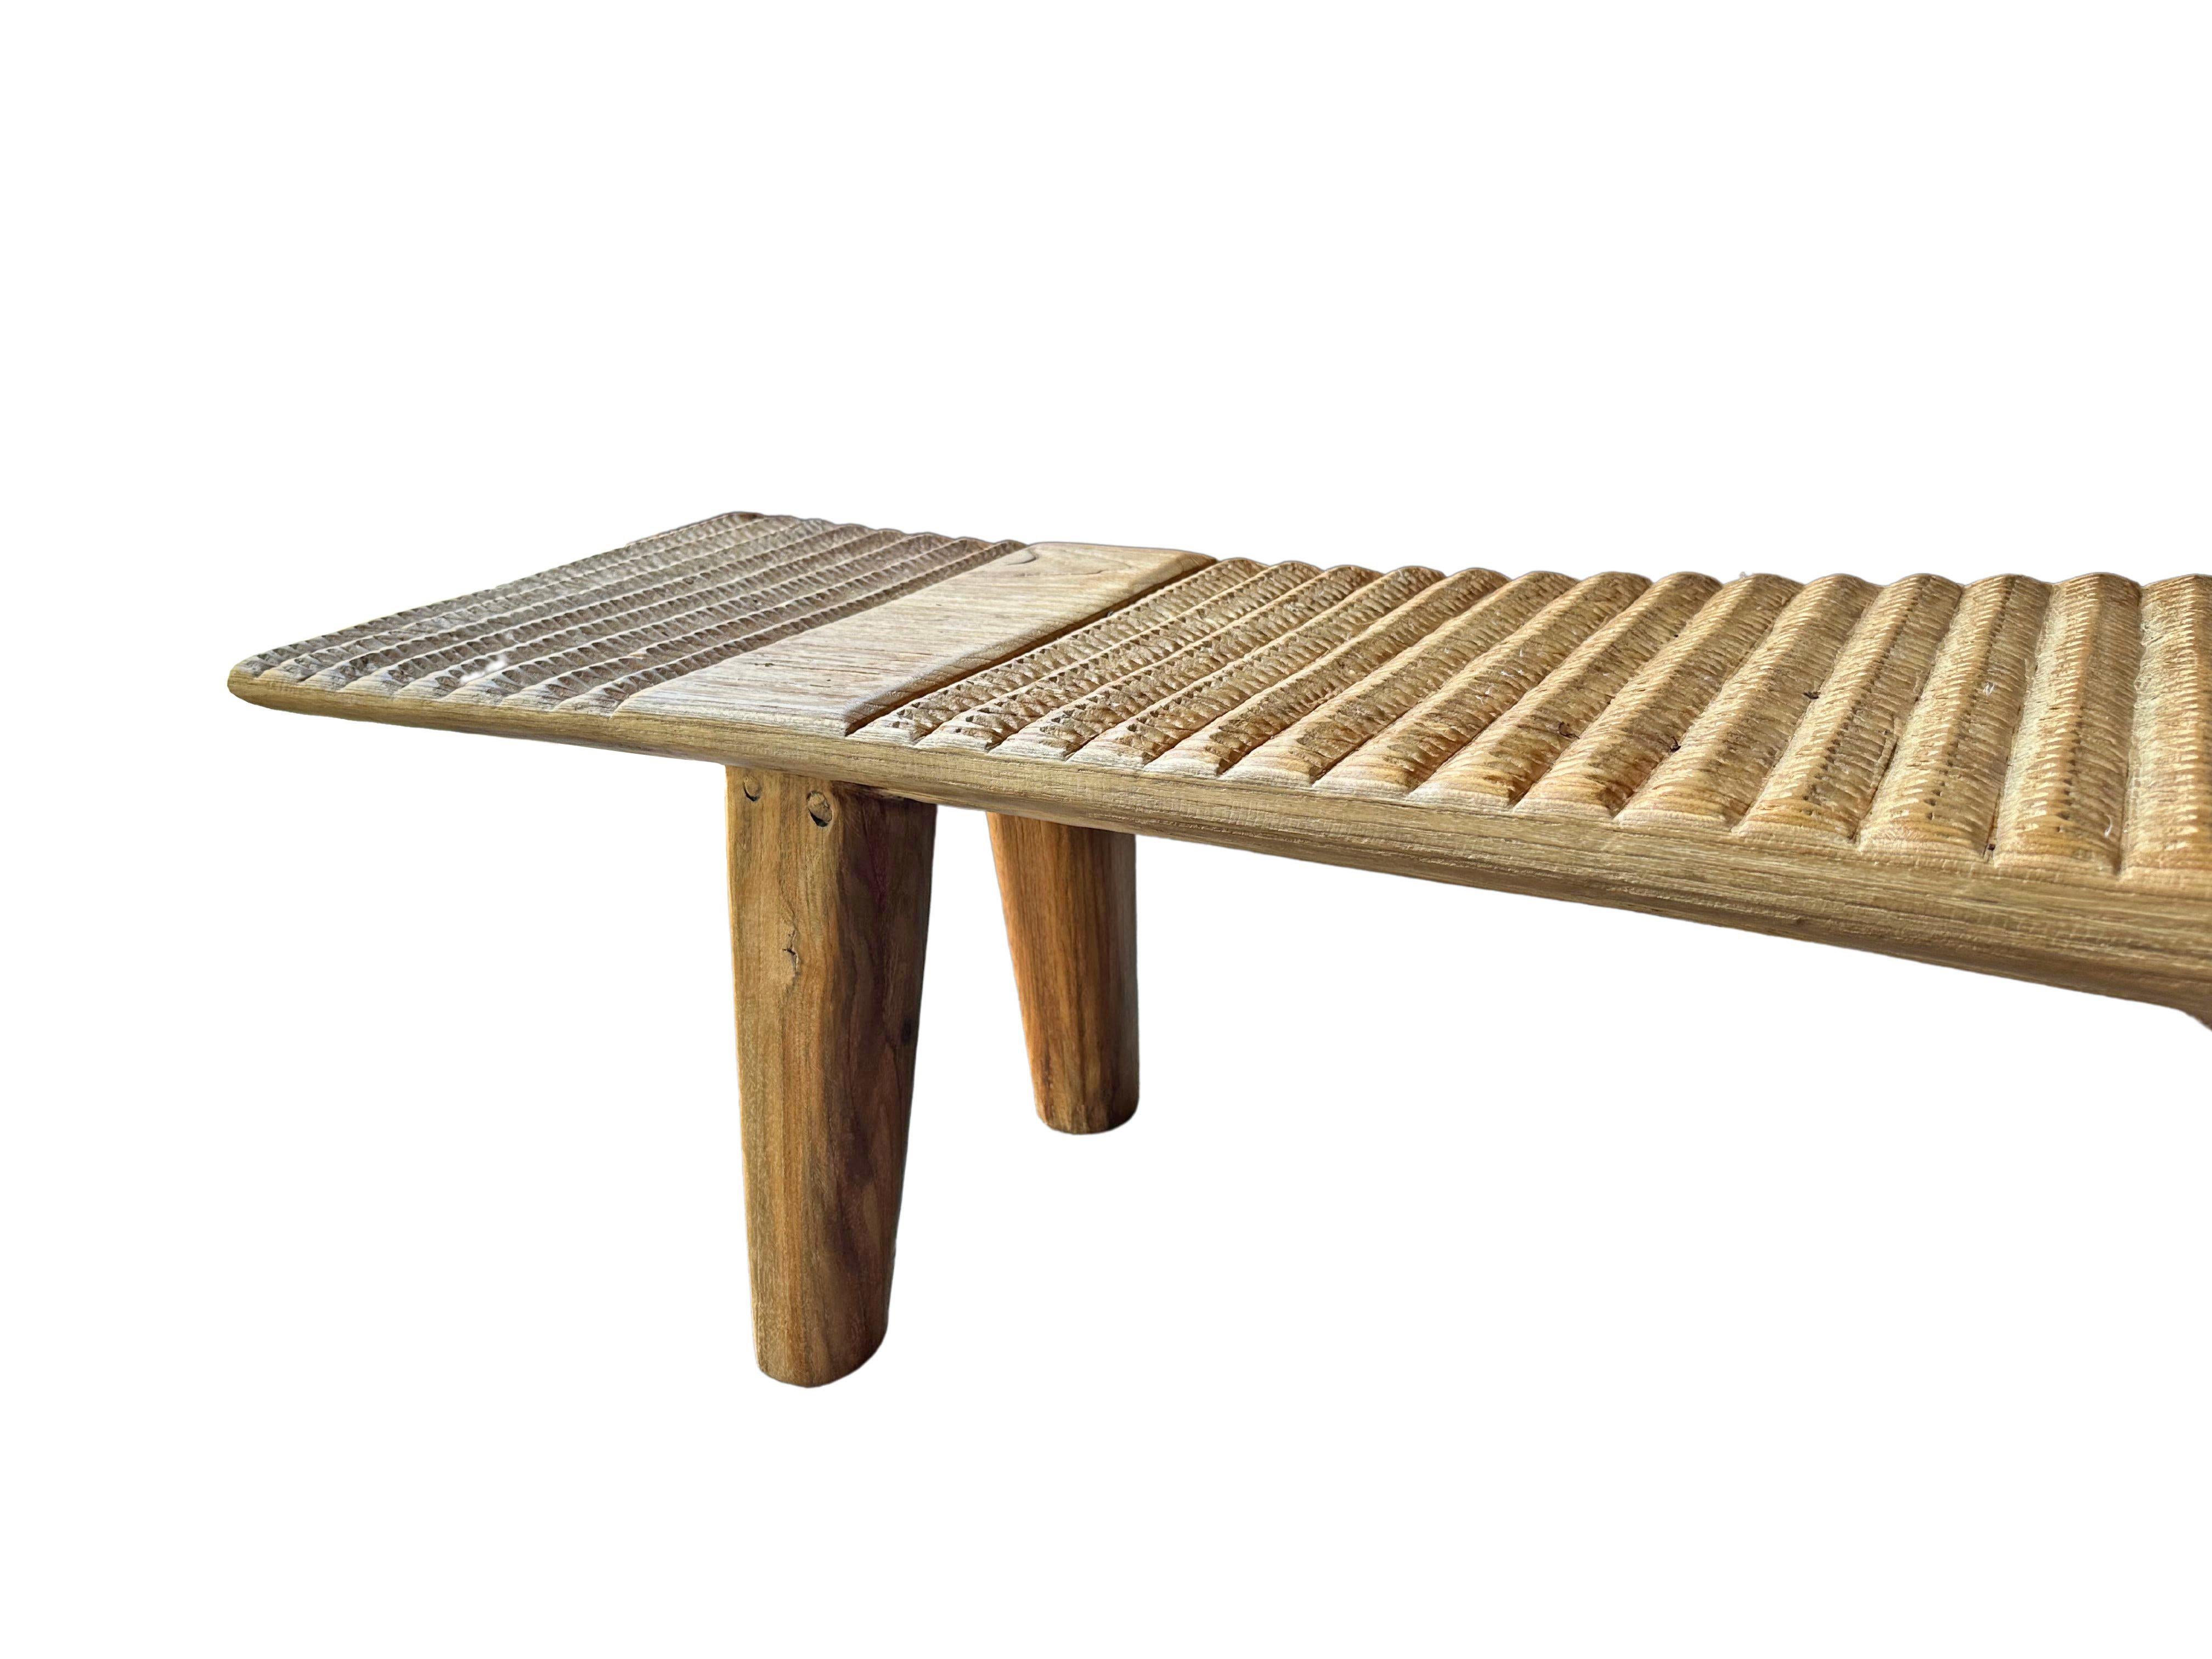 Indonesian Teak Wood Sculptural Long Bench, Carved Detailing, Modern Organic For Sale